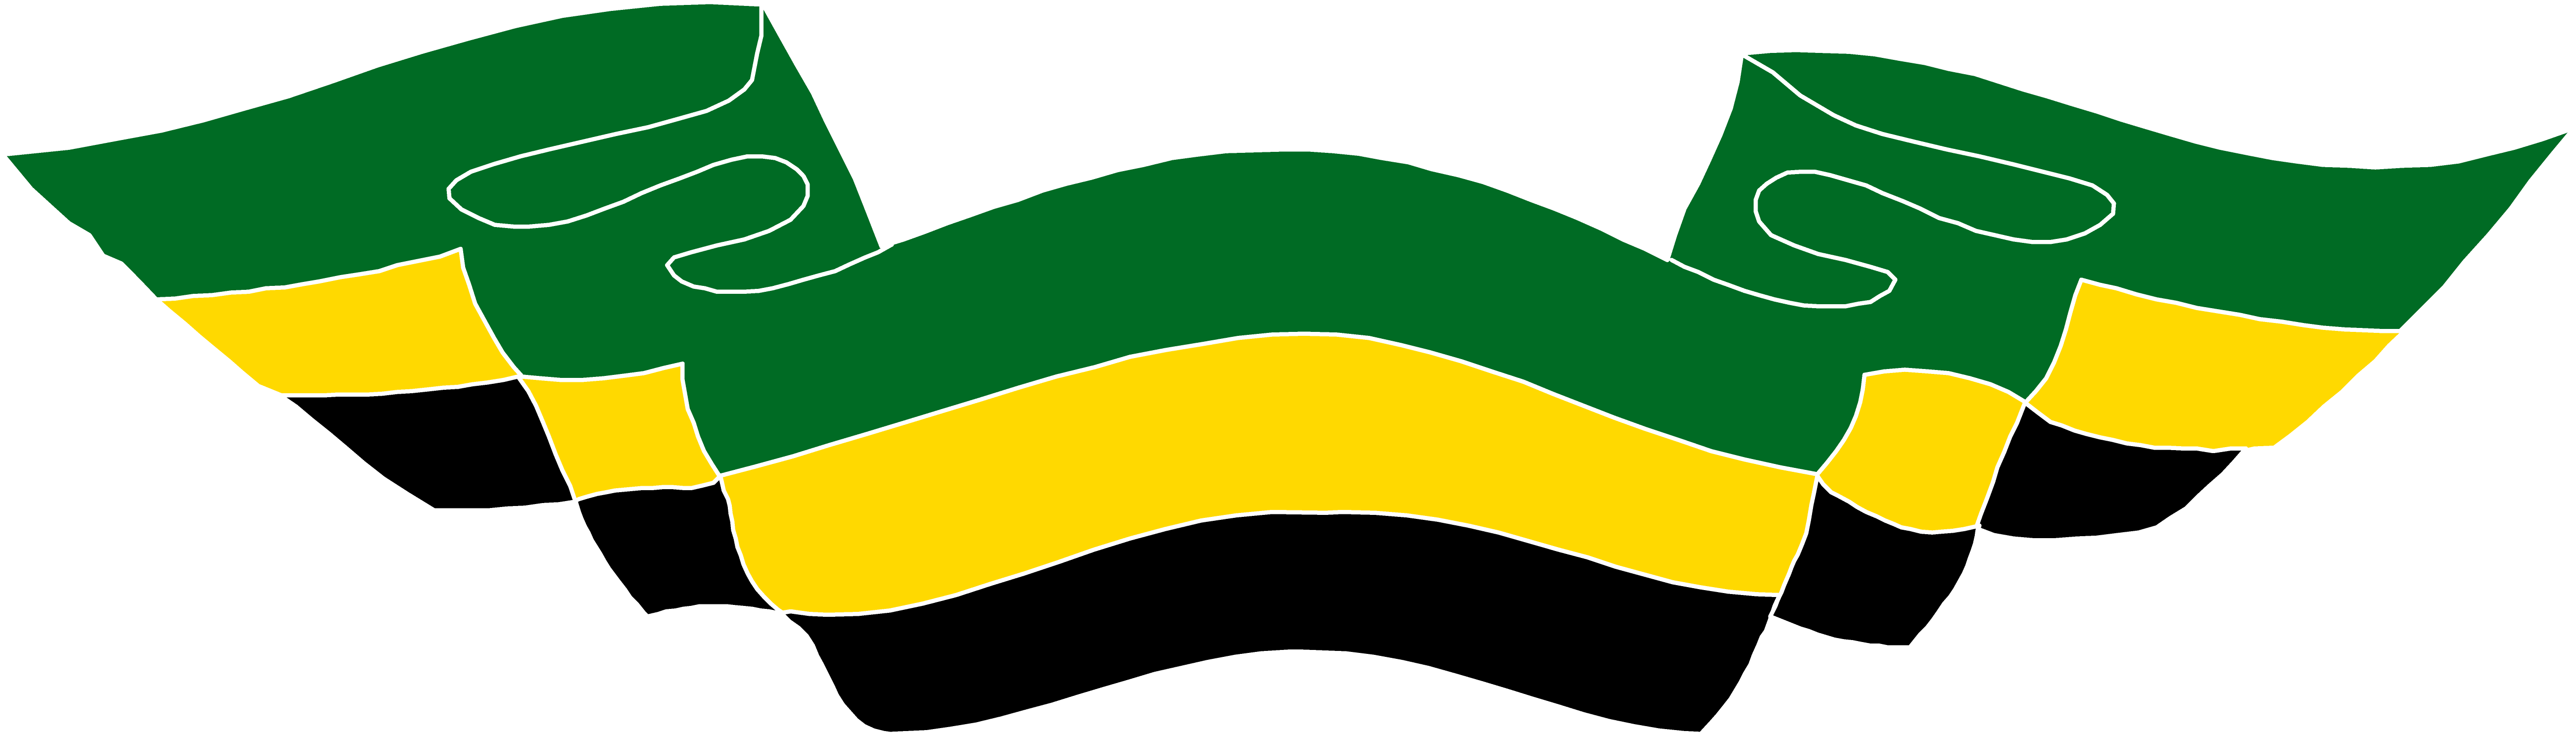 clipart jamaican flag - photo #13